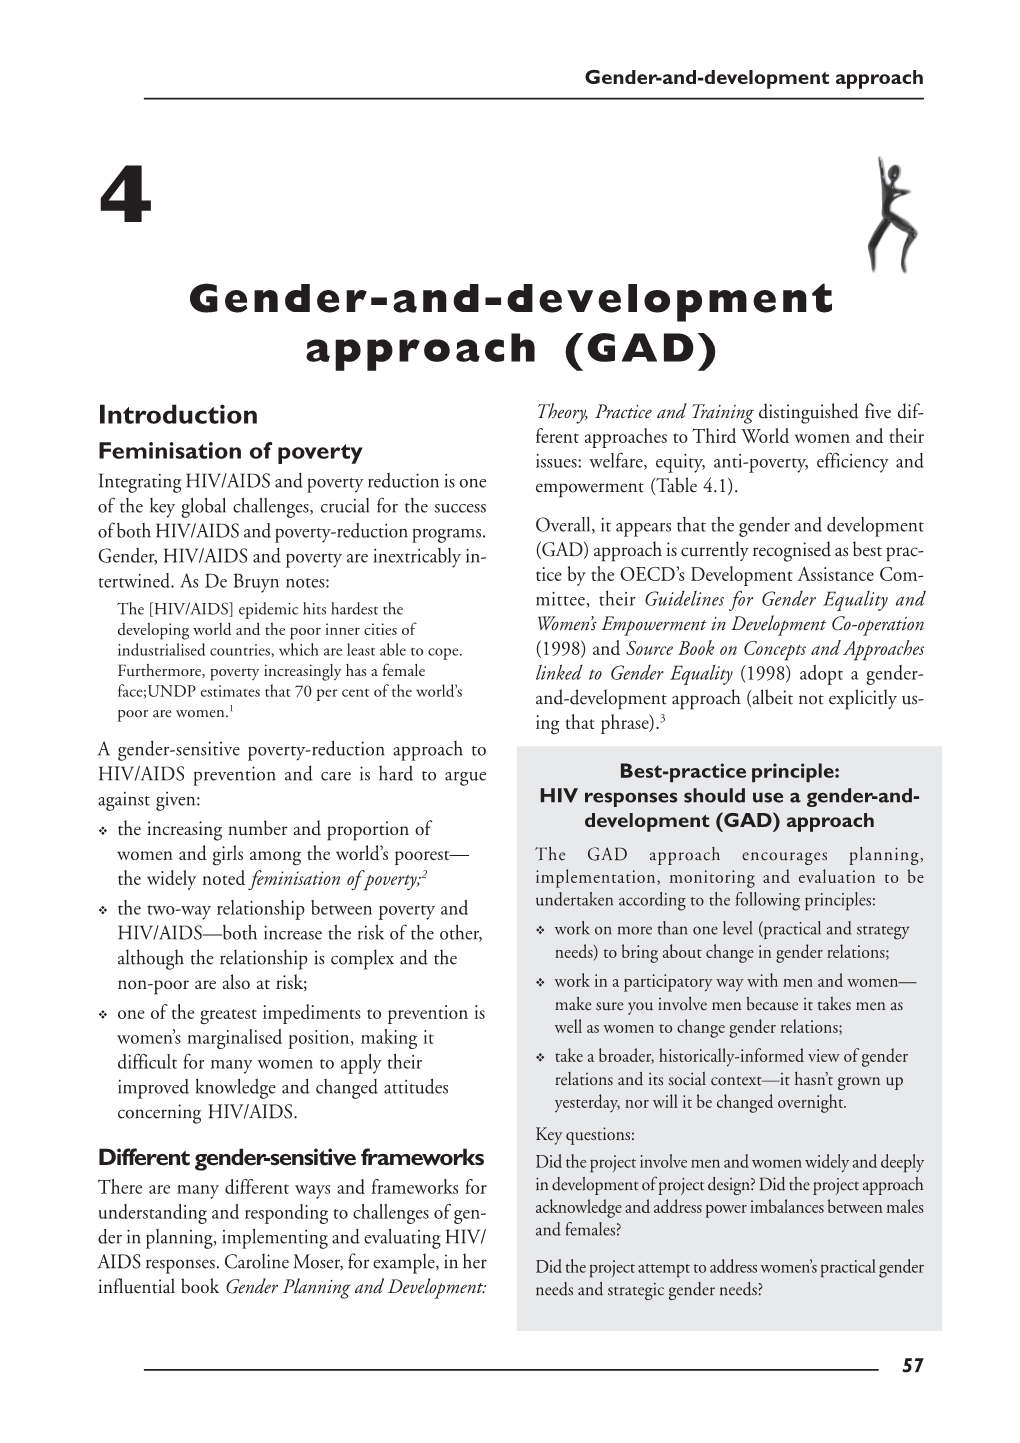 Gender-And-Development Approach (GAD)